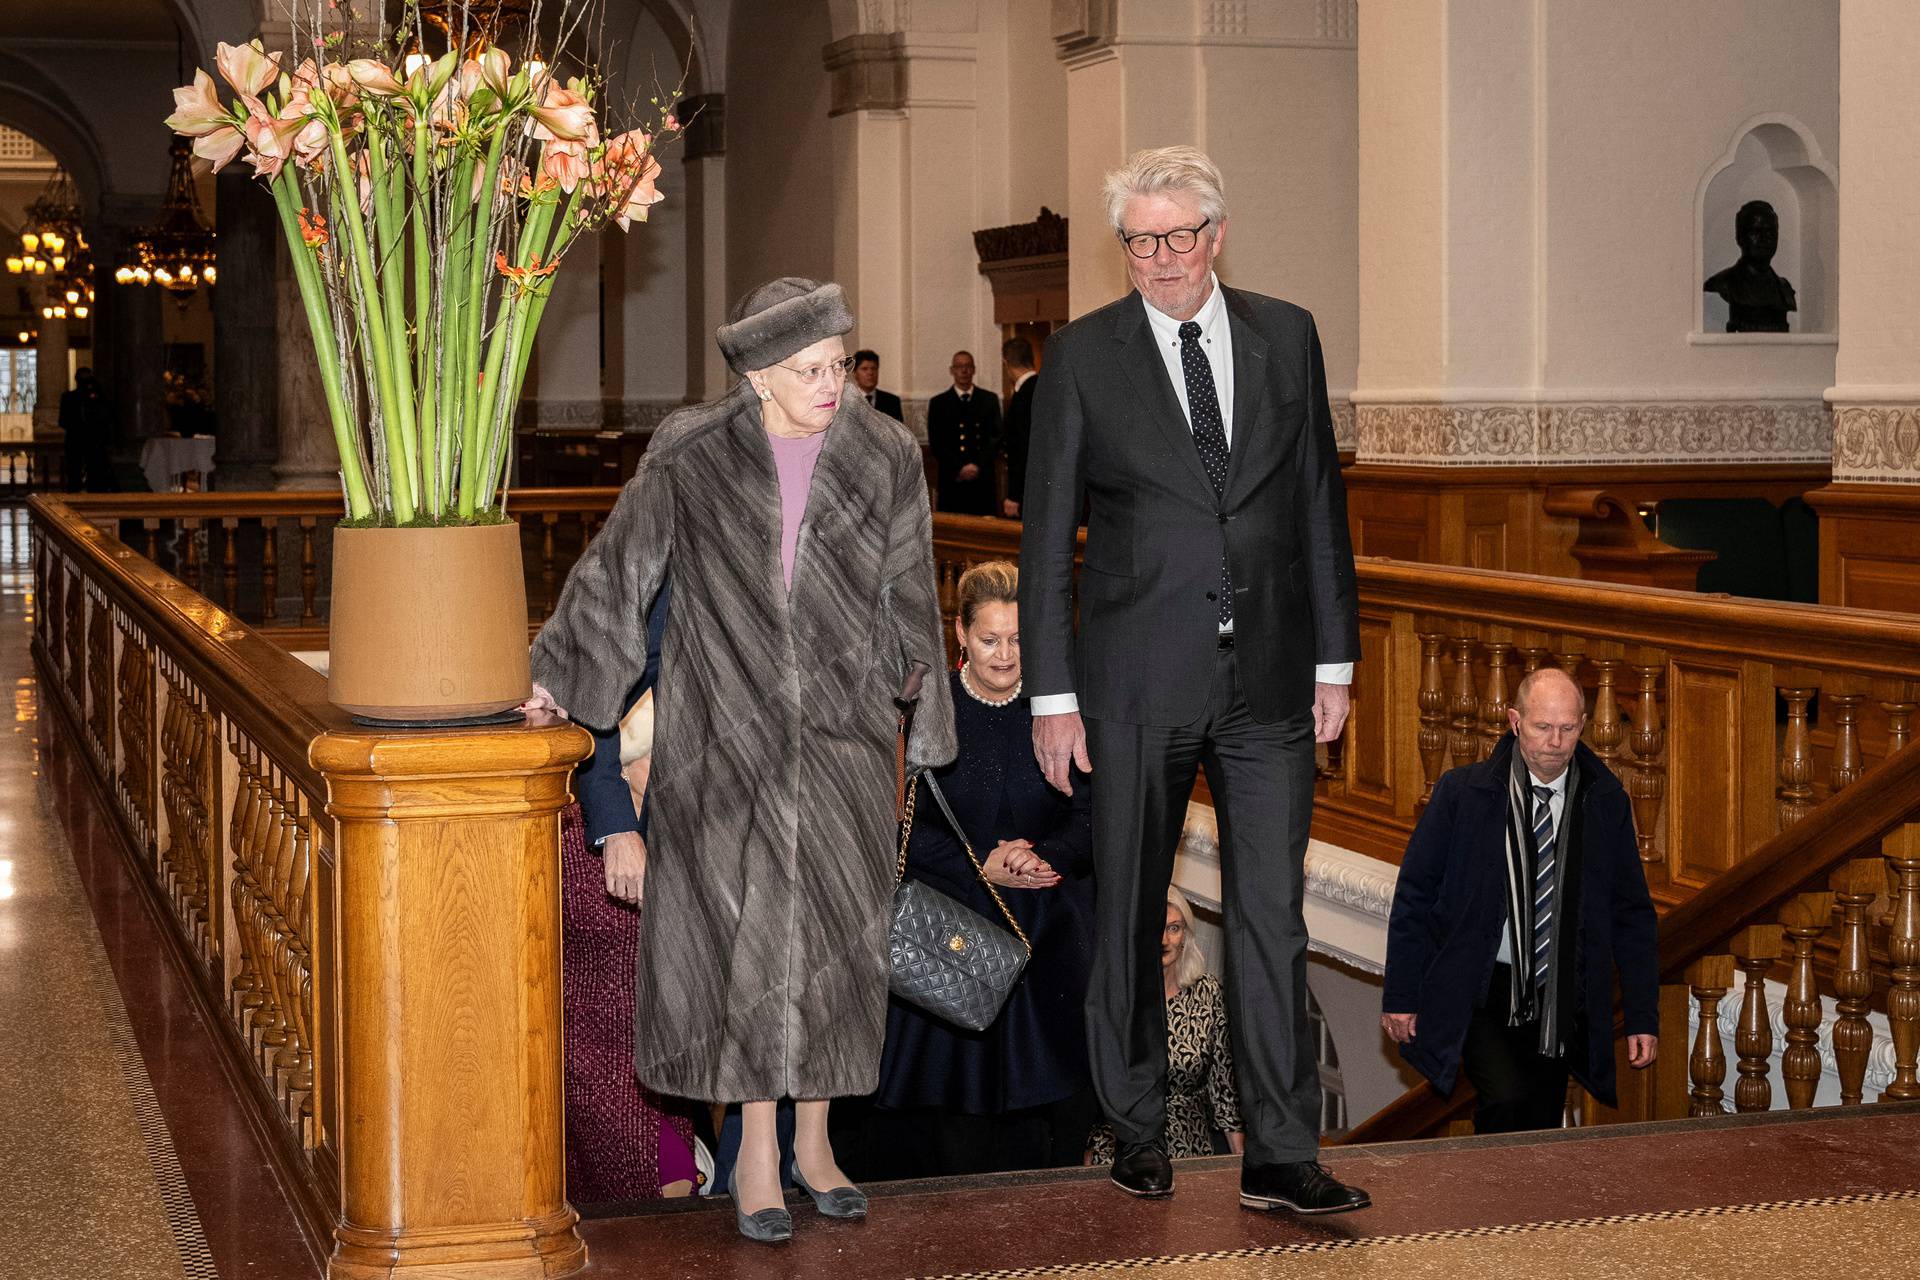 Denmark's royal family visits the Danish Parliament in Copenhagen